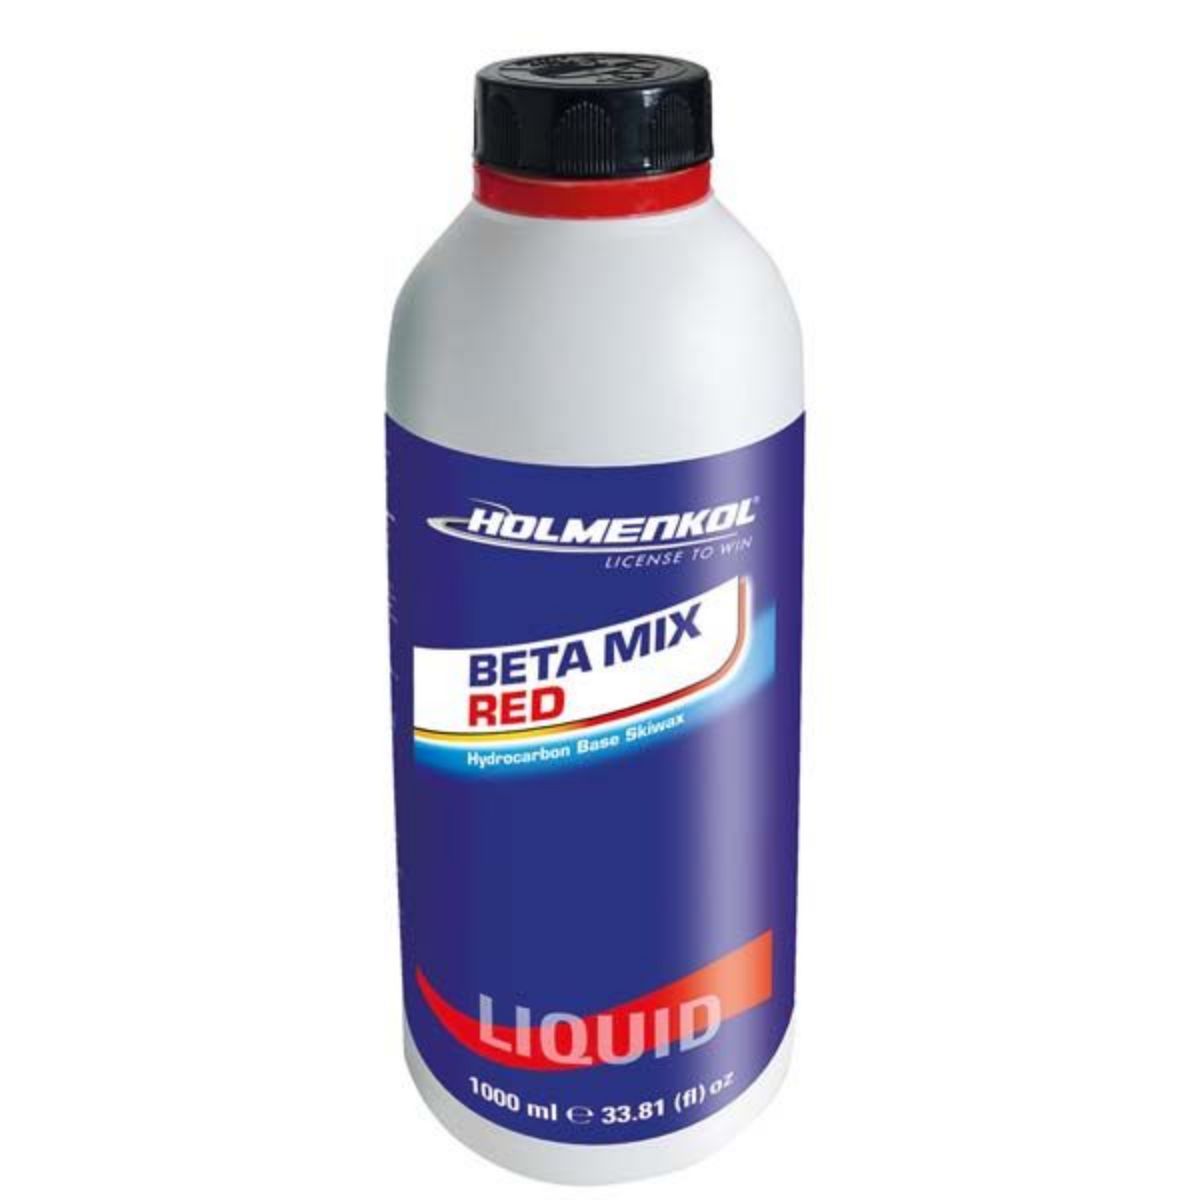 Holmenkol-betamix-red-liquid-250ml-fluorfri-glider